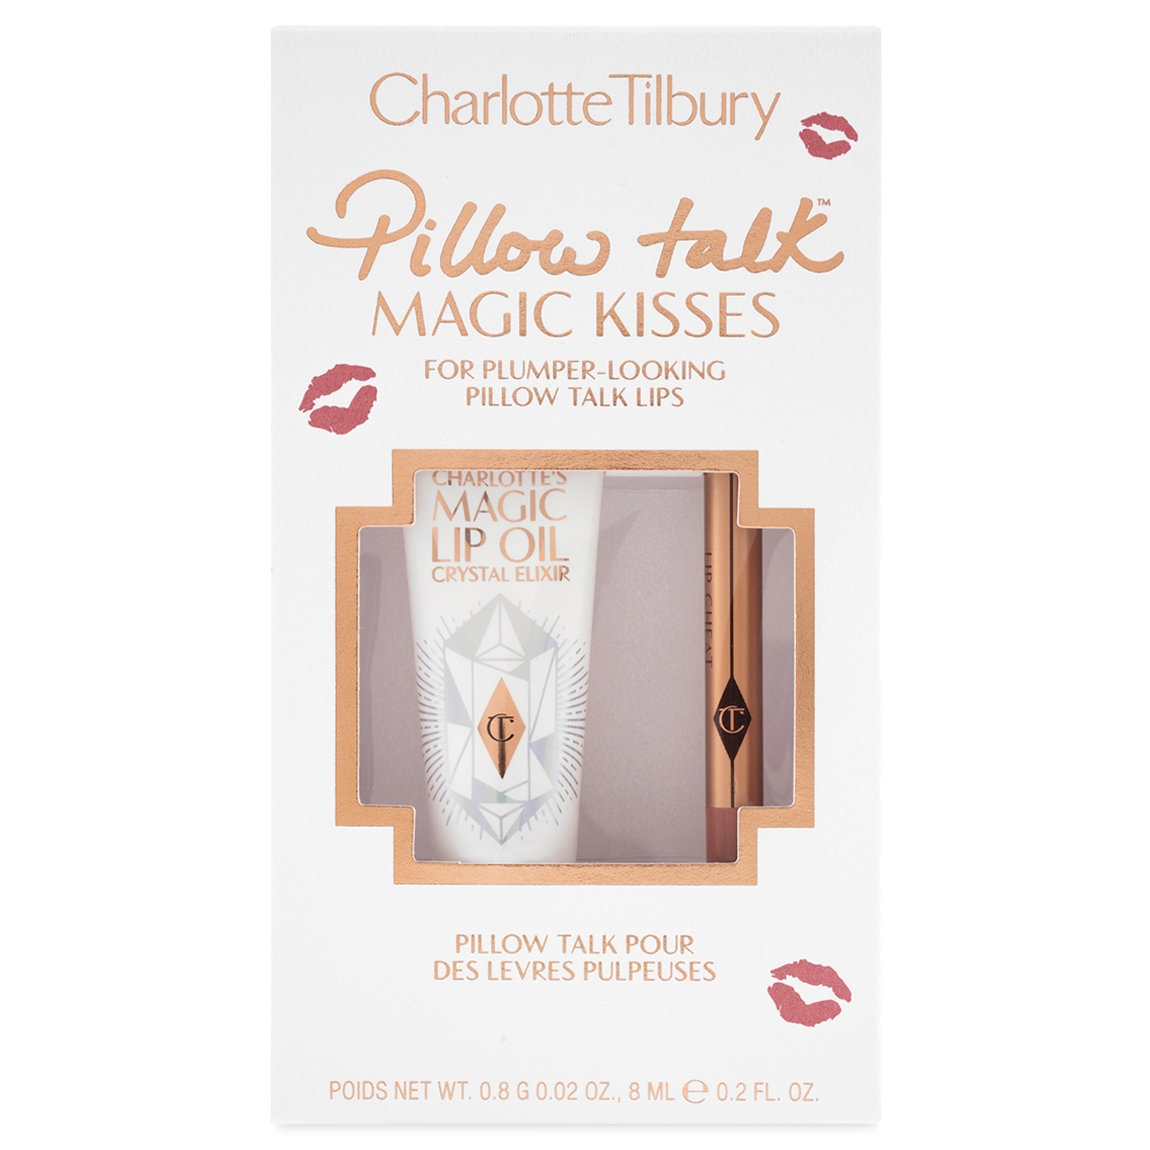 Charlotte Tilbury Pillow Talk Magic Kisses alternative view 1 - product swatch.